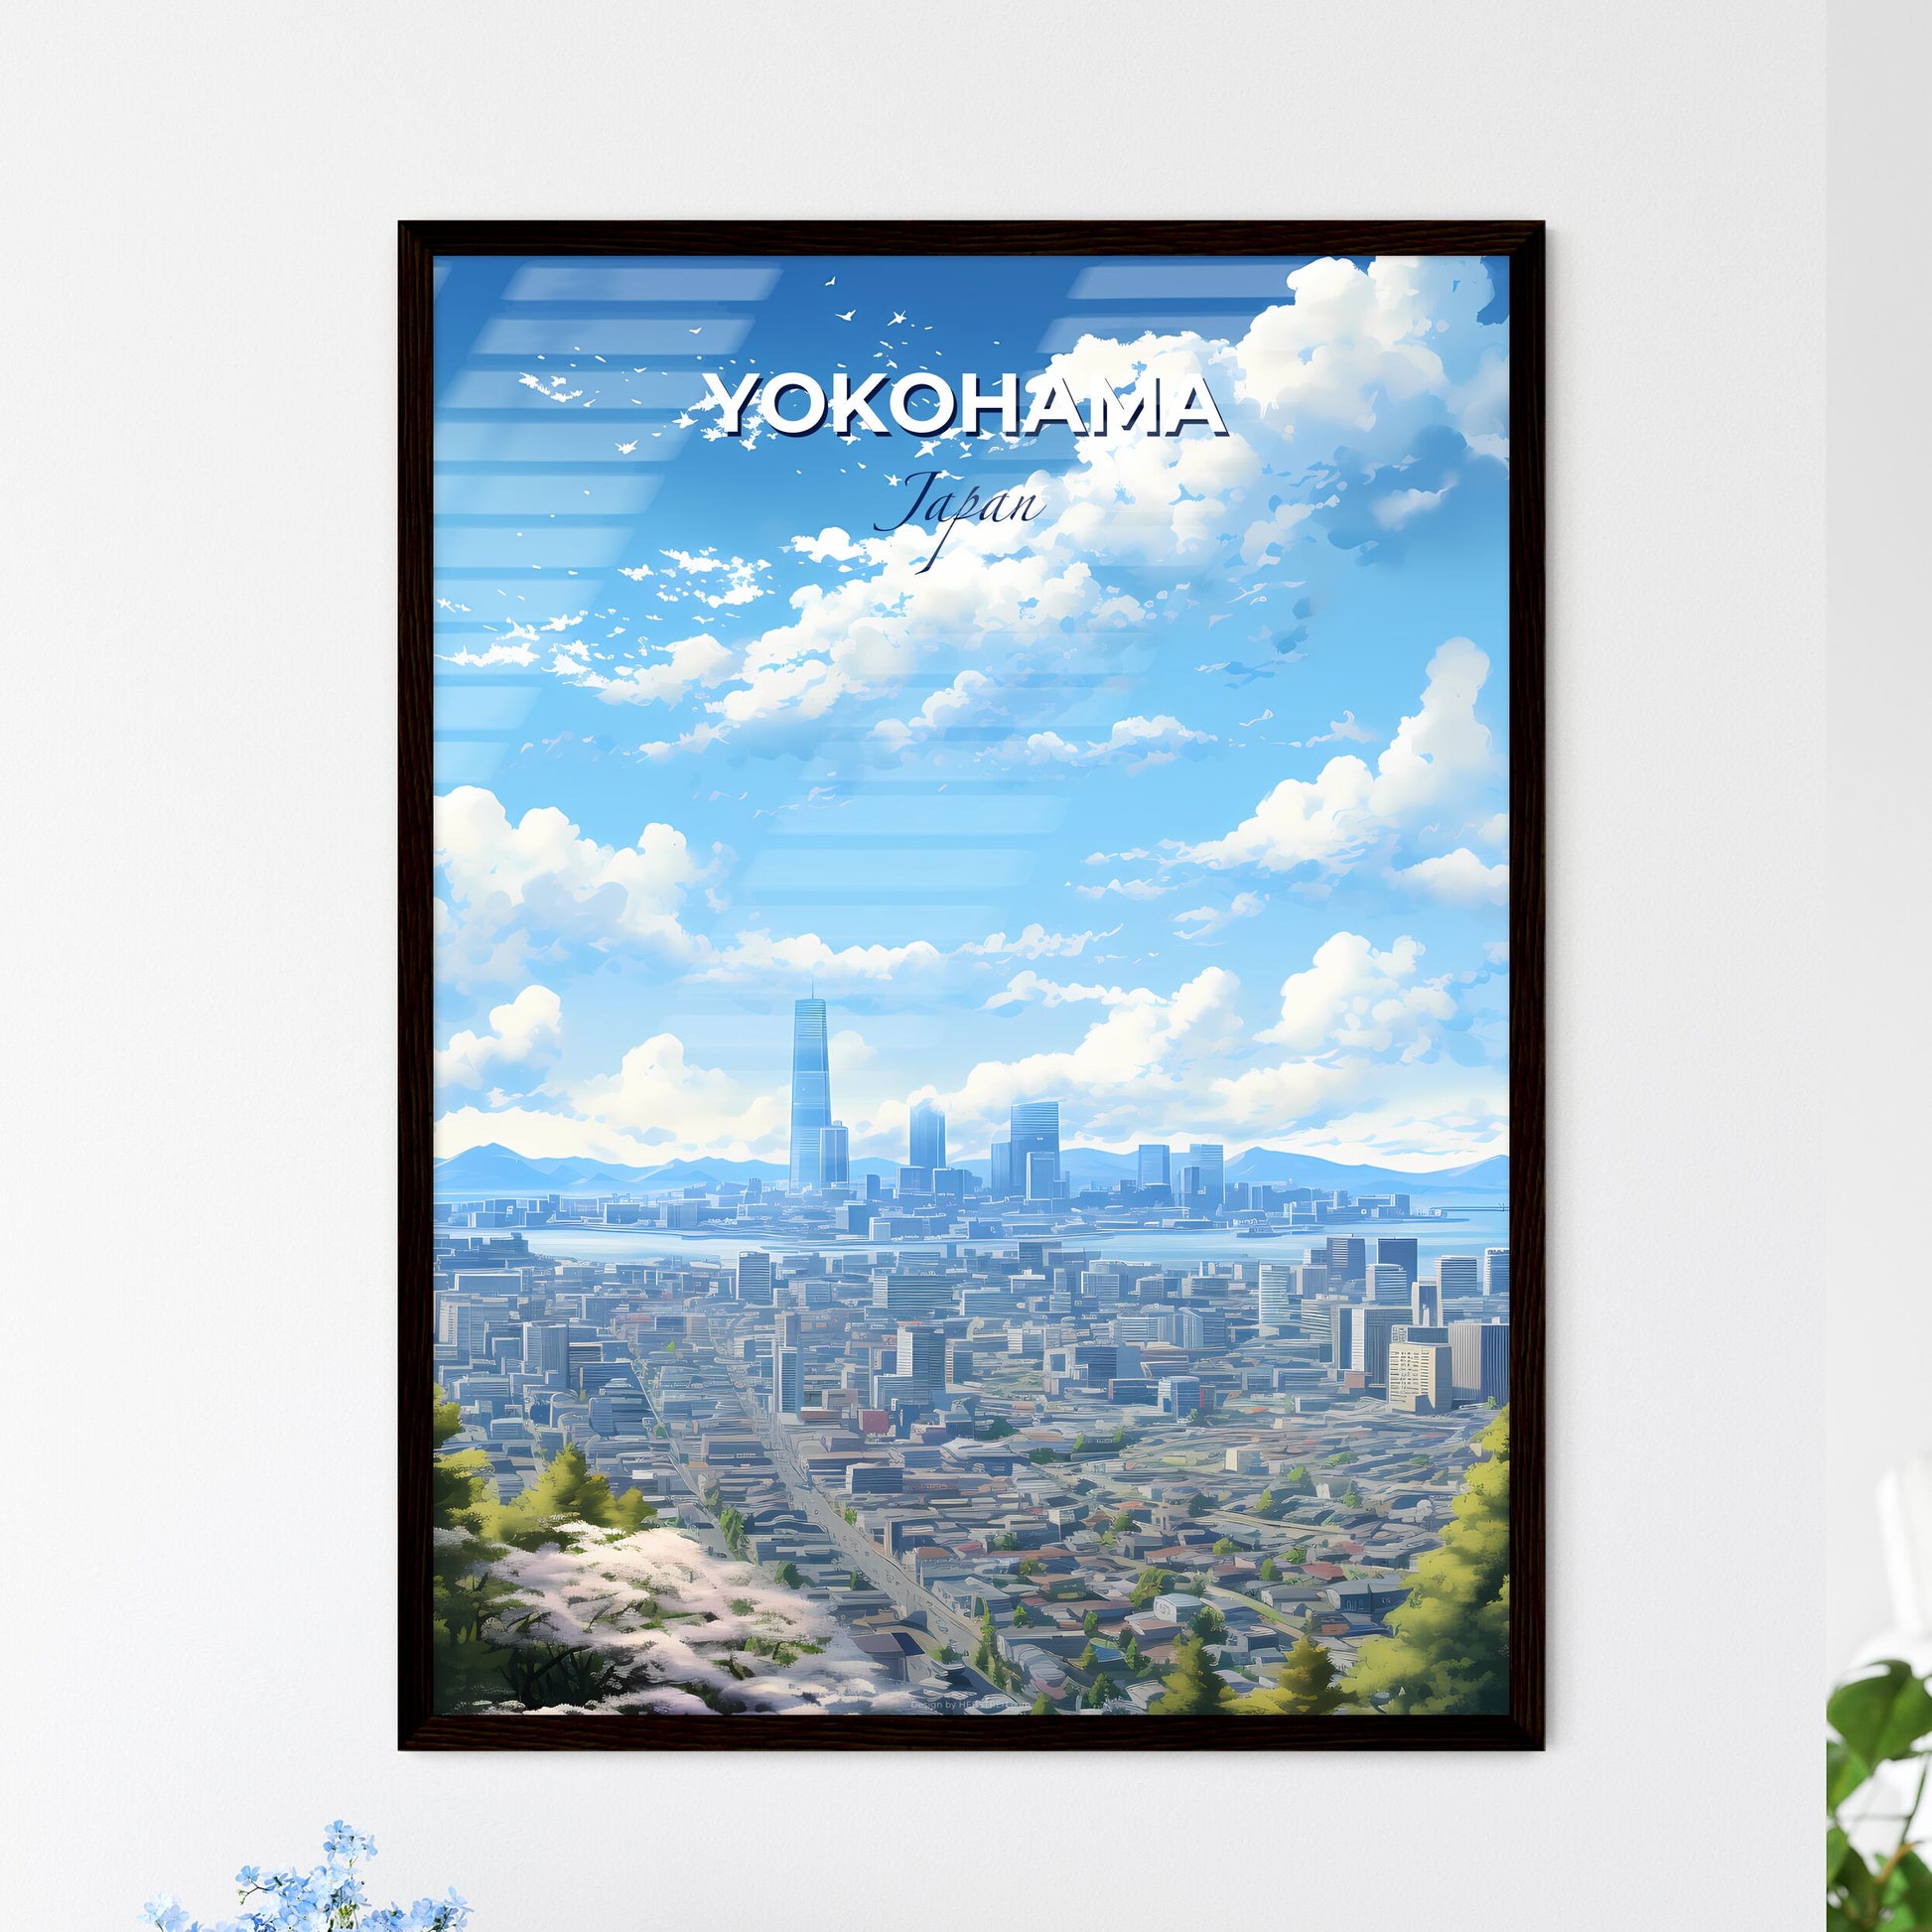 Yokohama Japan Skyline - A Cityscape With Trees And Blue Sky - Customizable Travel Gift Default Title